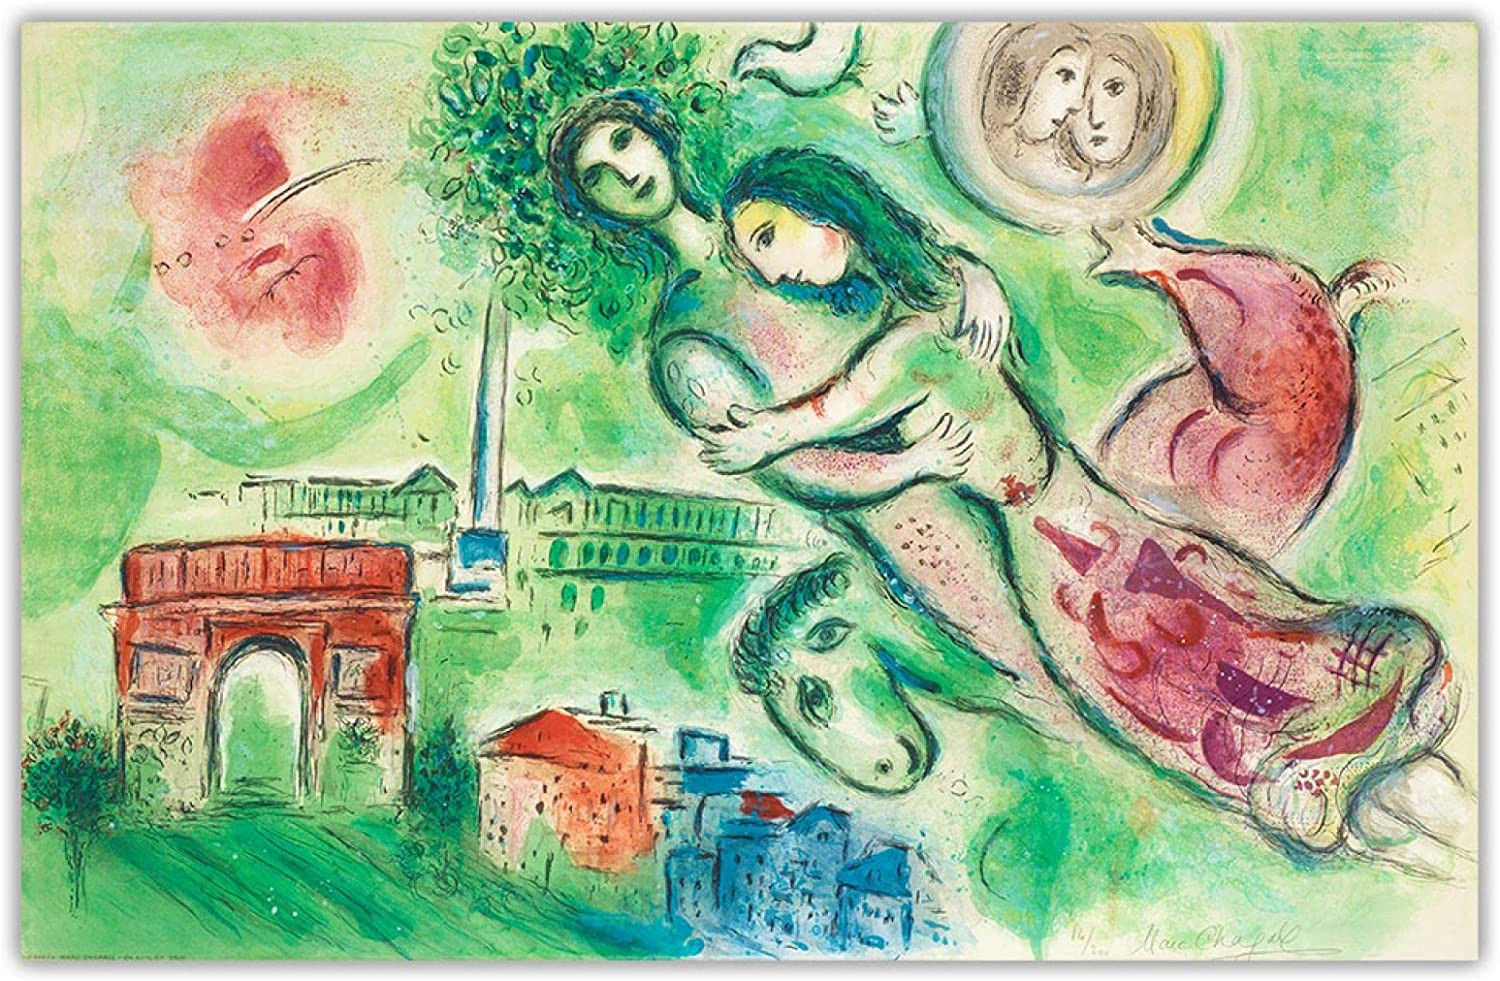 Lithographie von Marc Chagall, La flûte enchantée (Die Zauberflöte), 1967